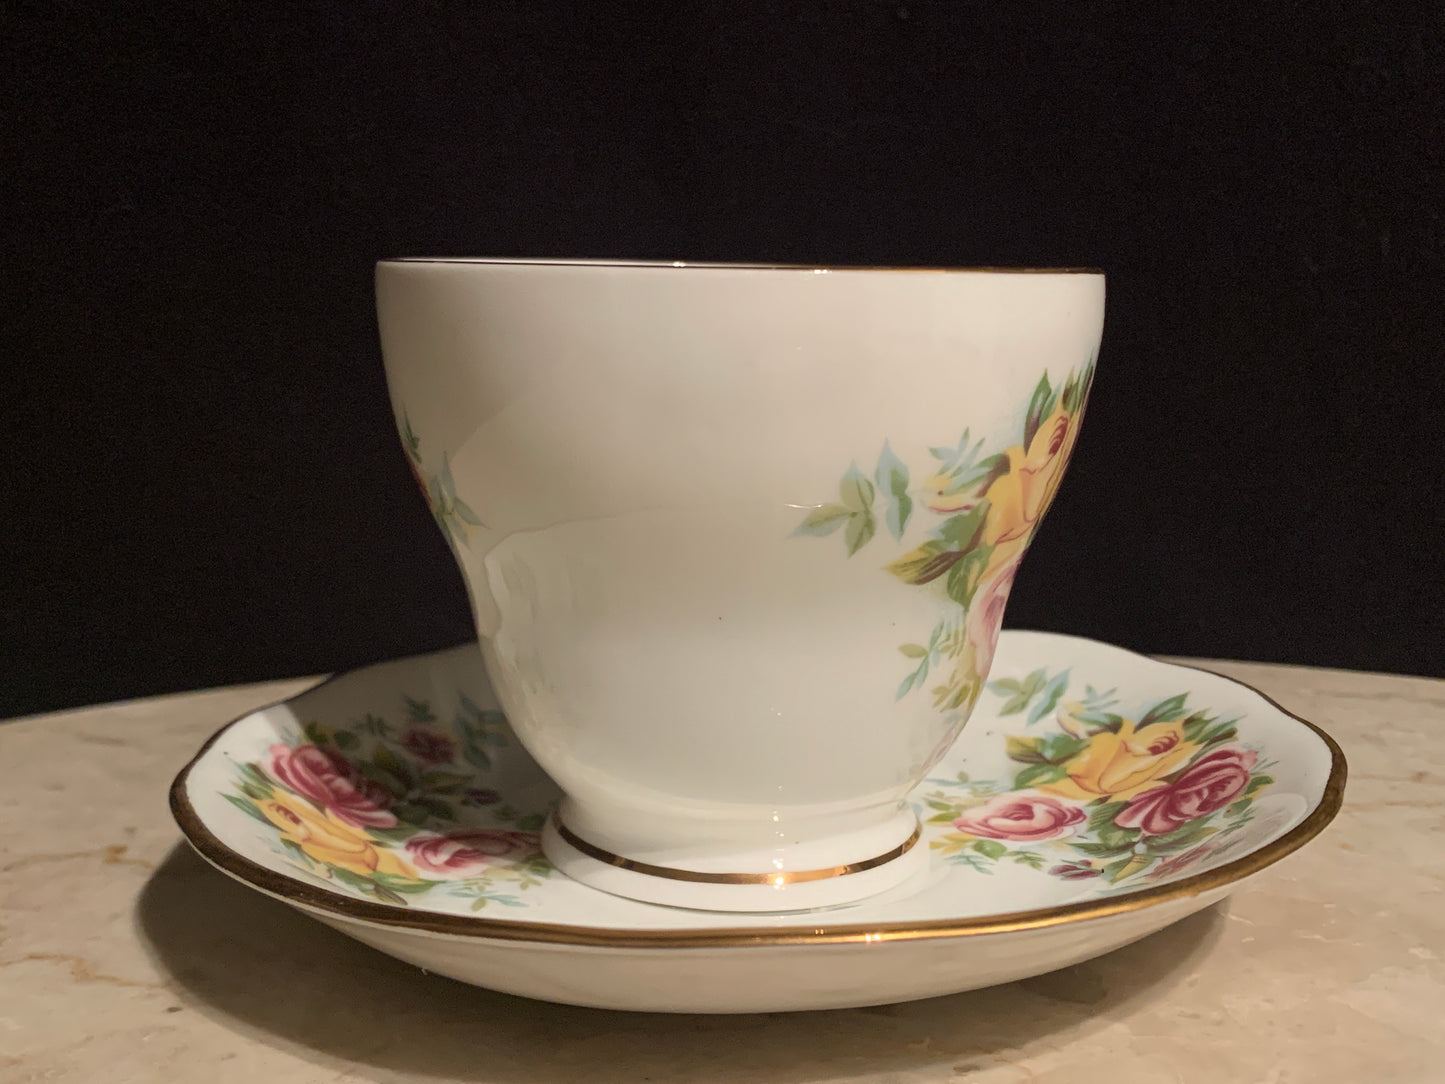 Vintage Teacup Made in India Vintage Tea Cup with Floral Pattern